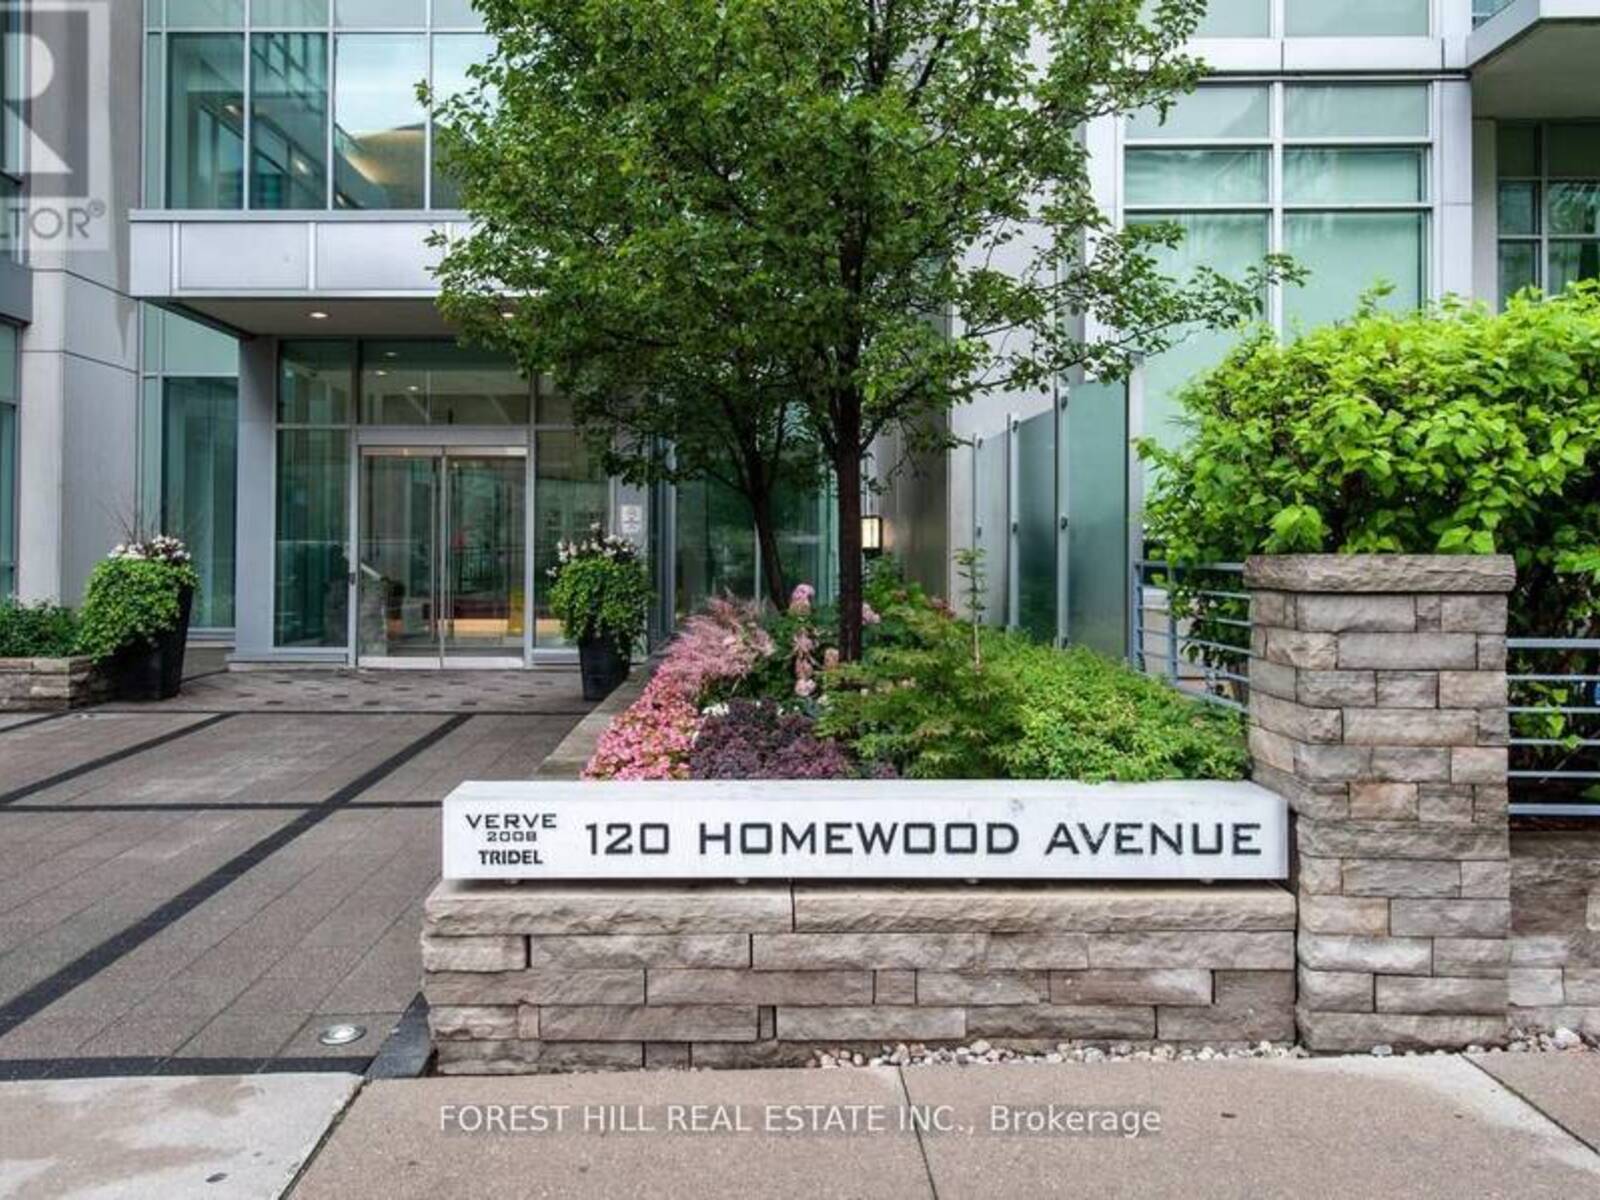 1207 - 120 HOMEWOOD AVENUE, Toronto, Ontario M4Y 2J3